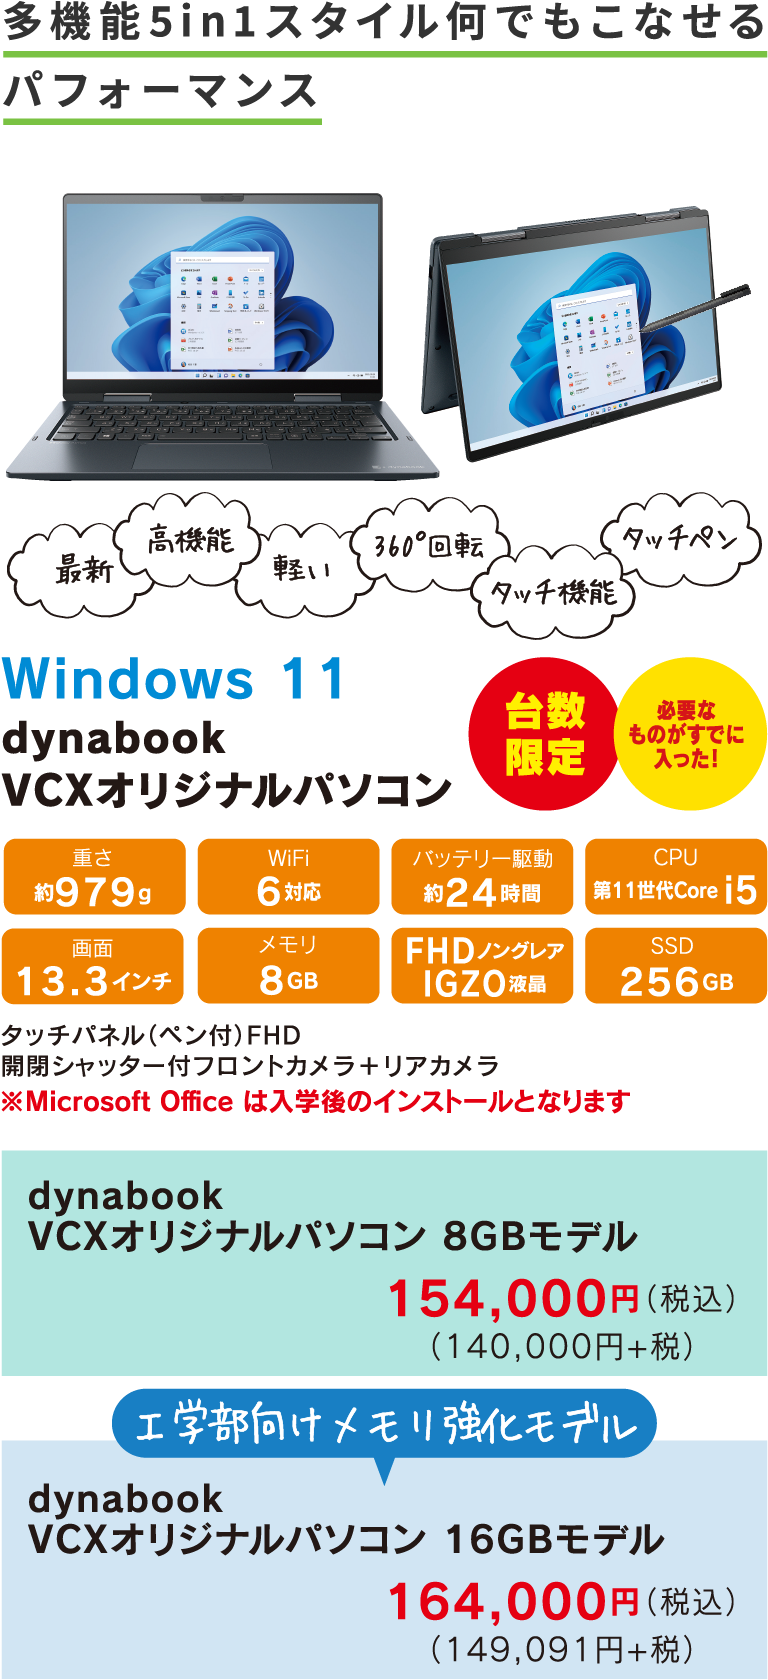 Windows11 dynabook VCXオリジナルパソコン